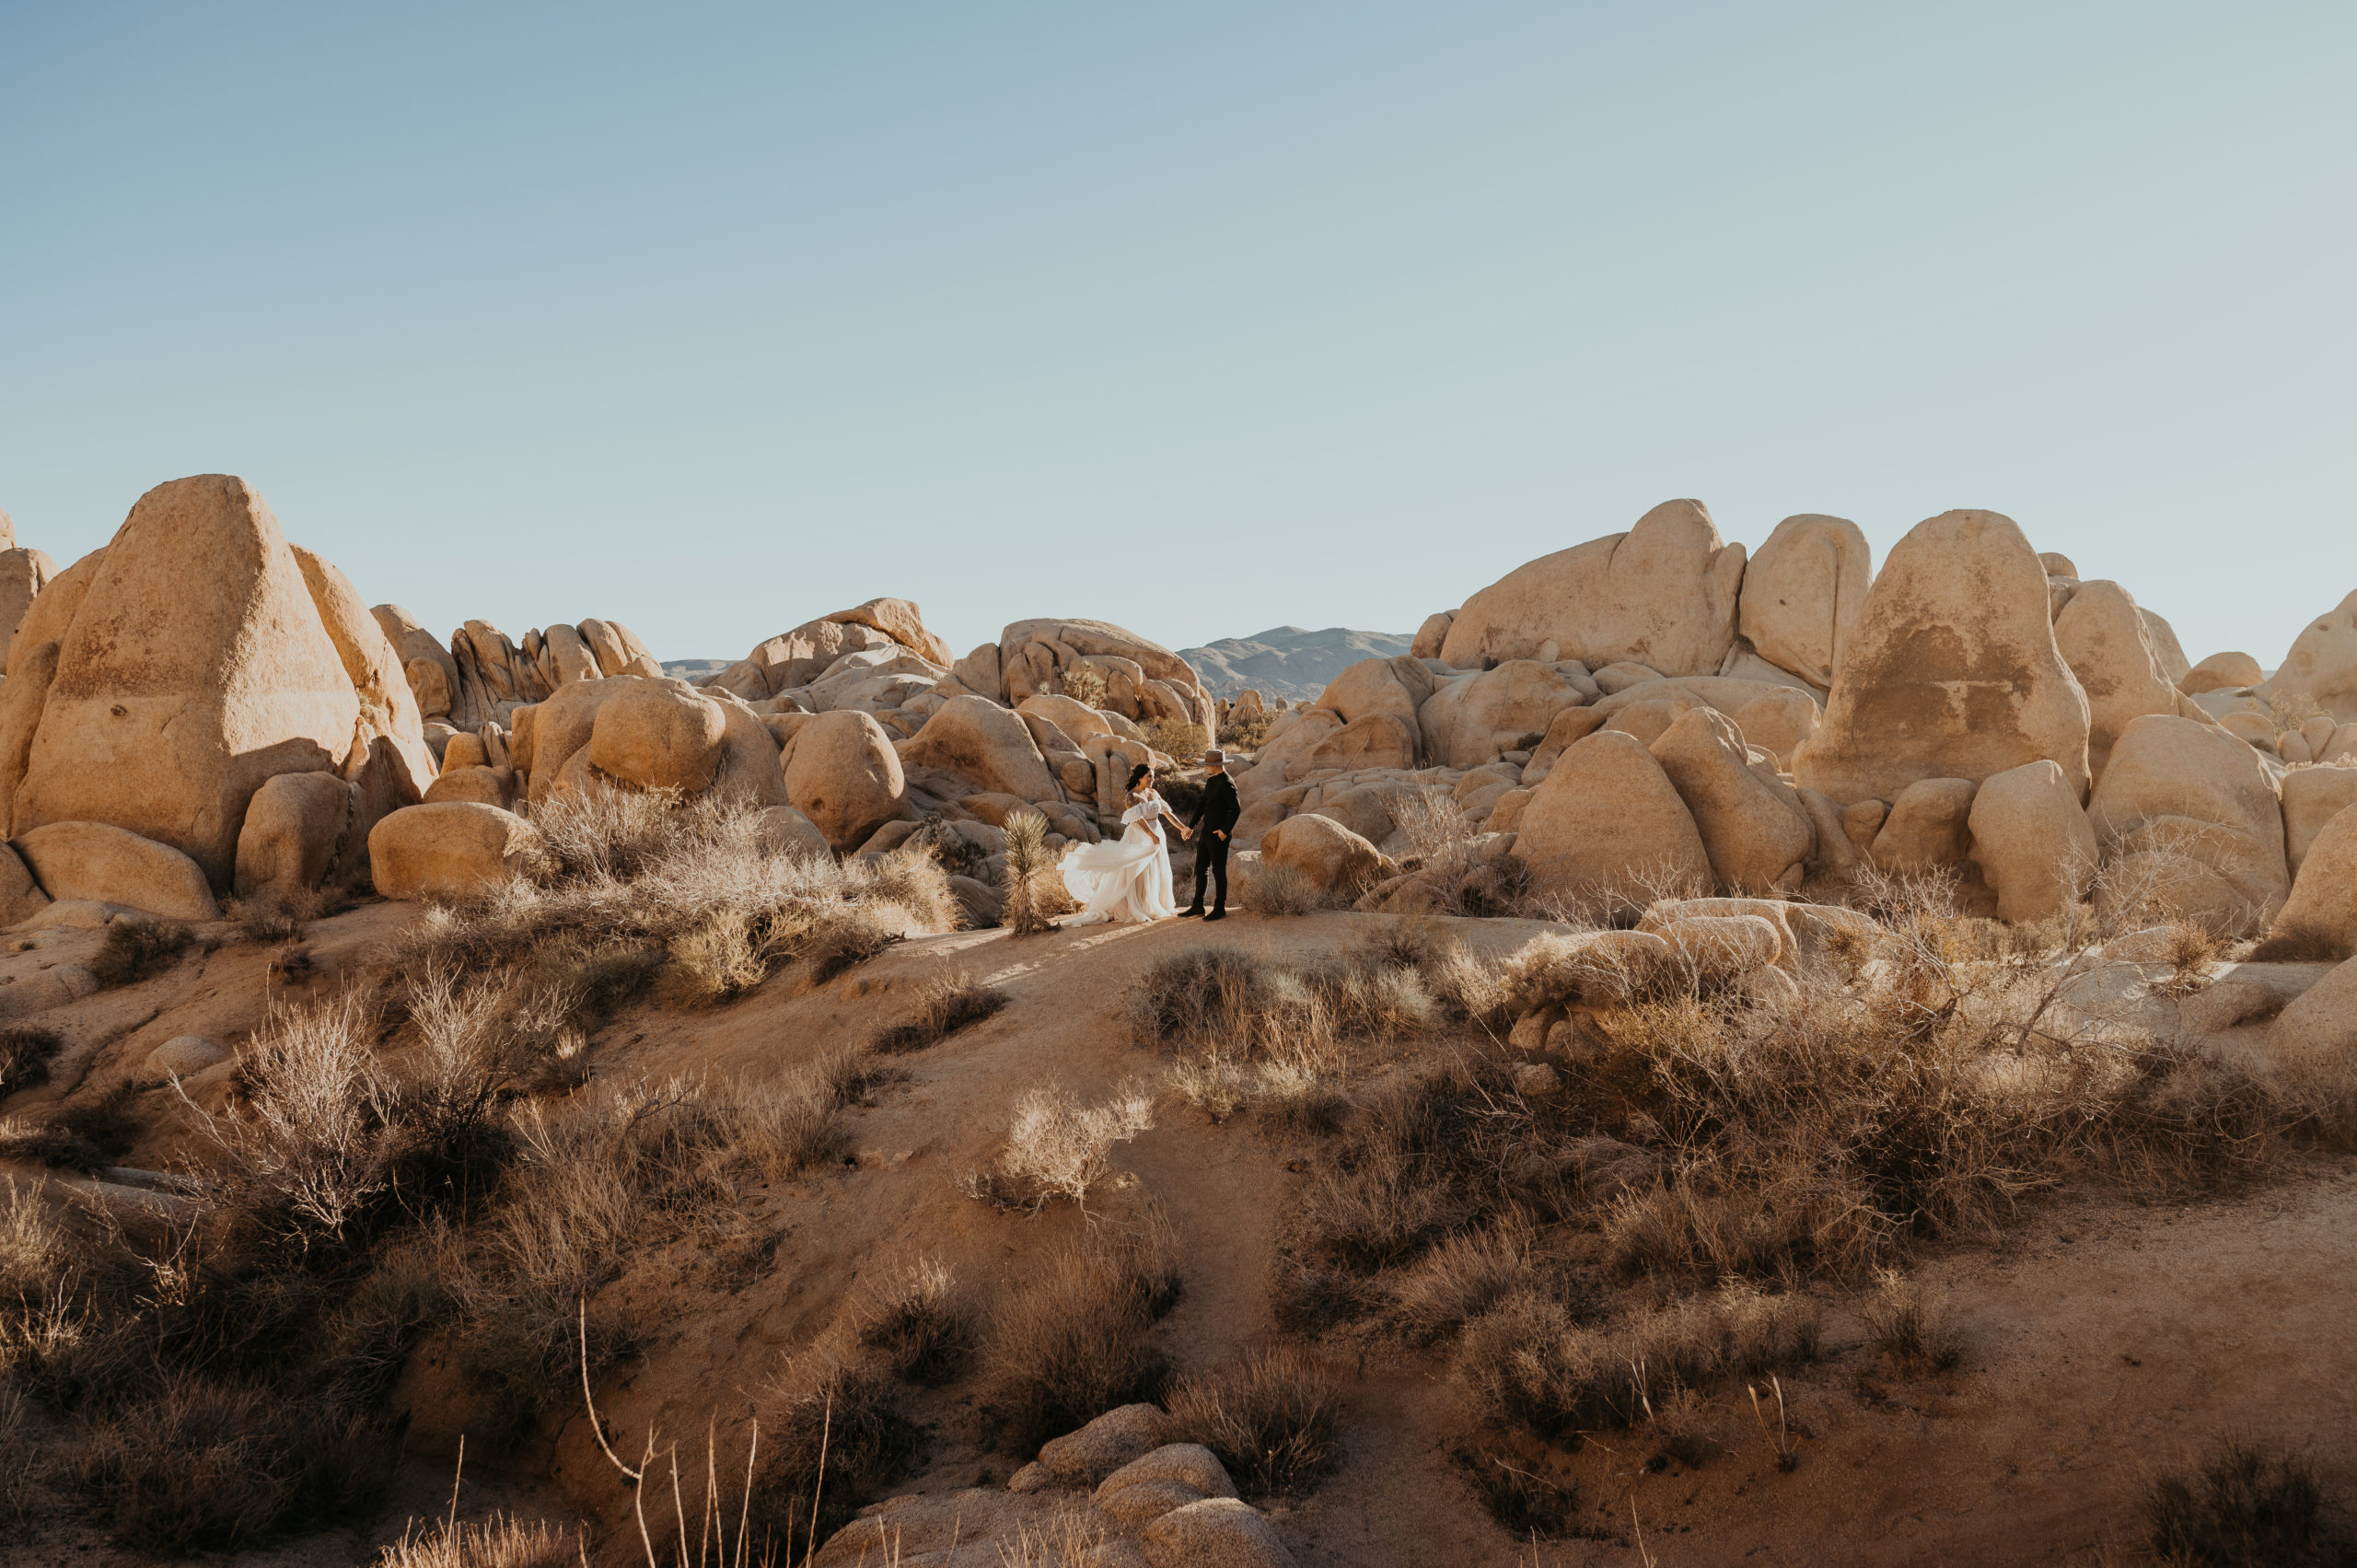 A couple in wedding attire dances in the desert.